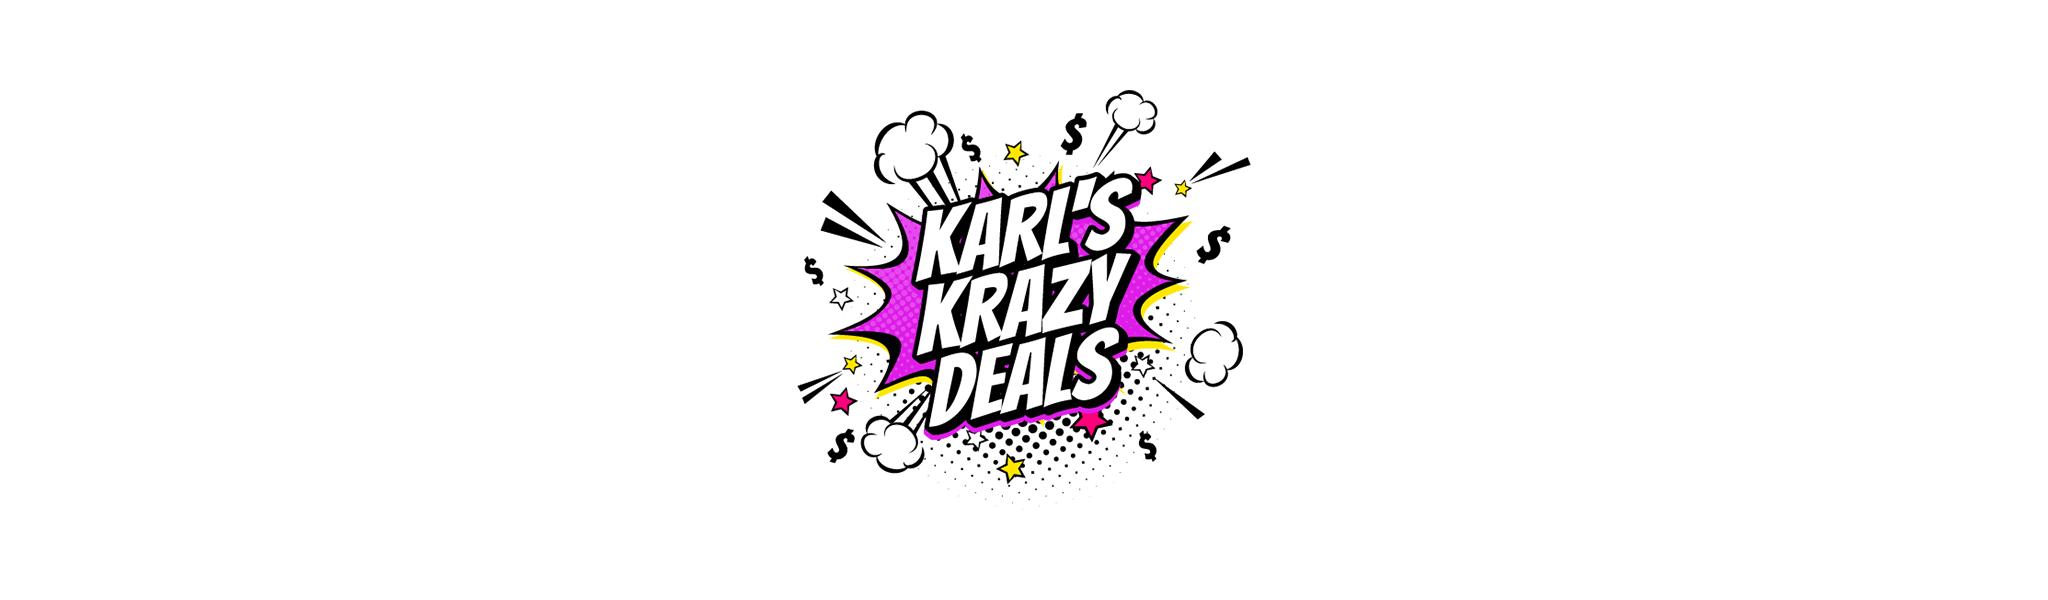 Karl's Krazy Deals